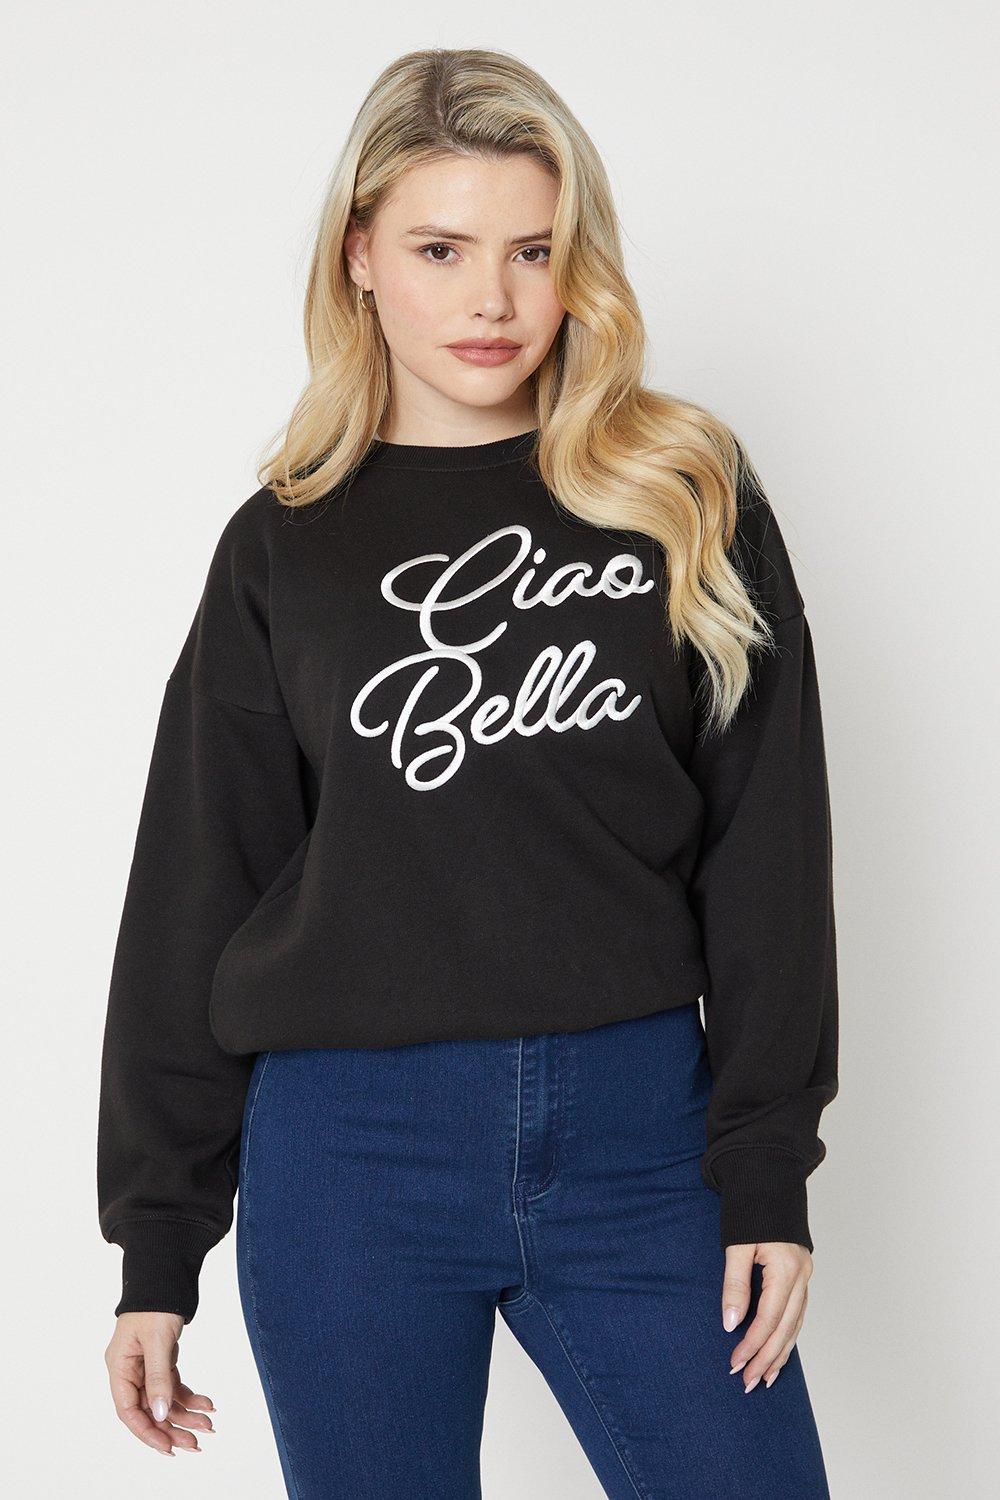 Womens Ciao Bella Sweatshirt